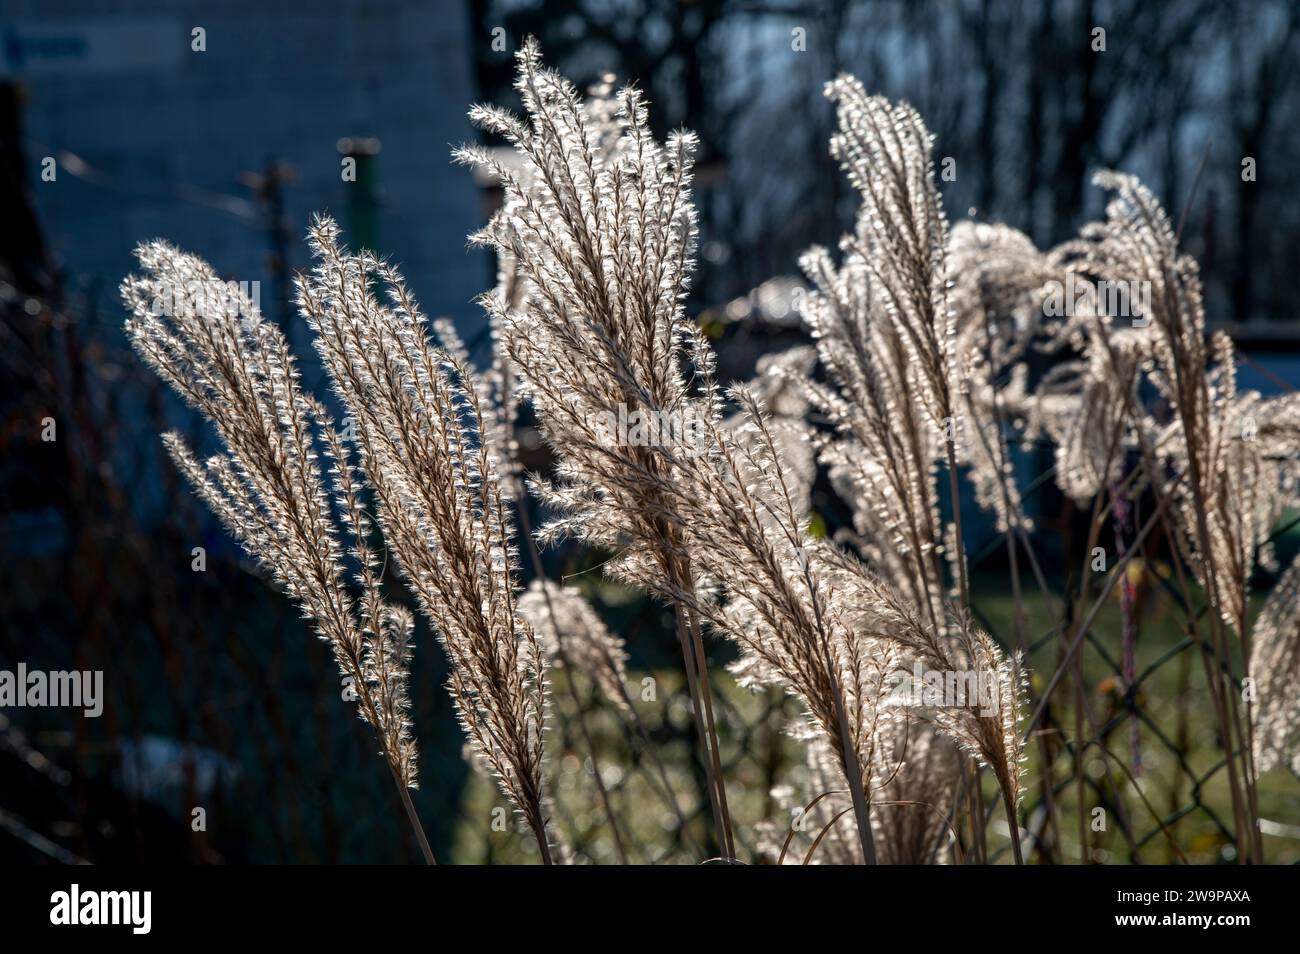 Miscanthus sinensis, l'eulalia o erba d'argento cinese in inverno. Foto Stock